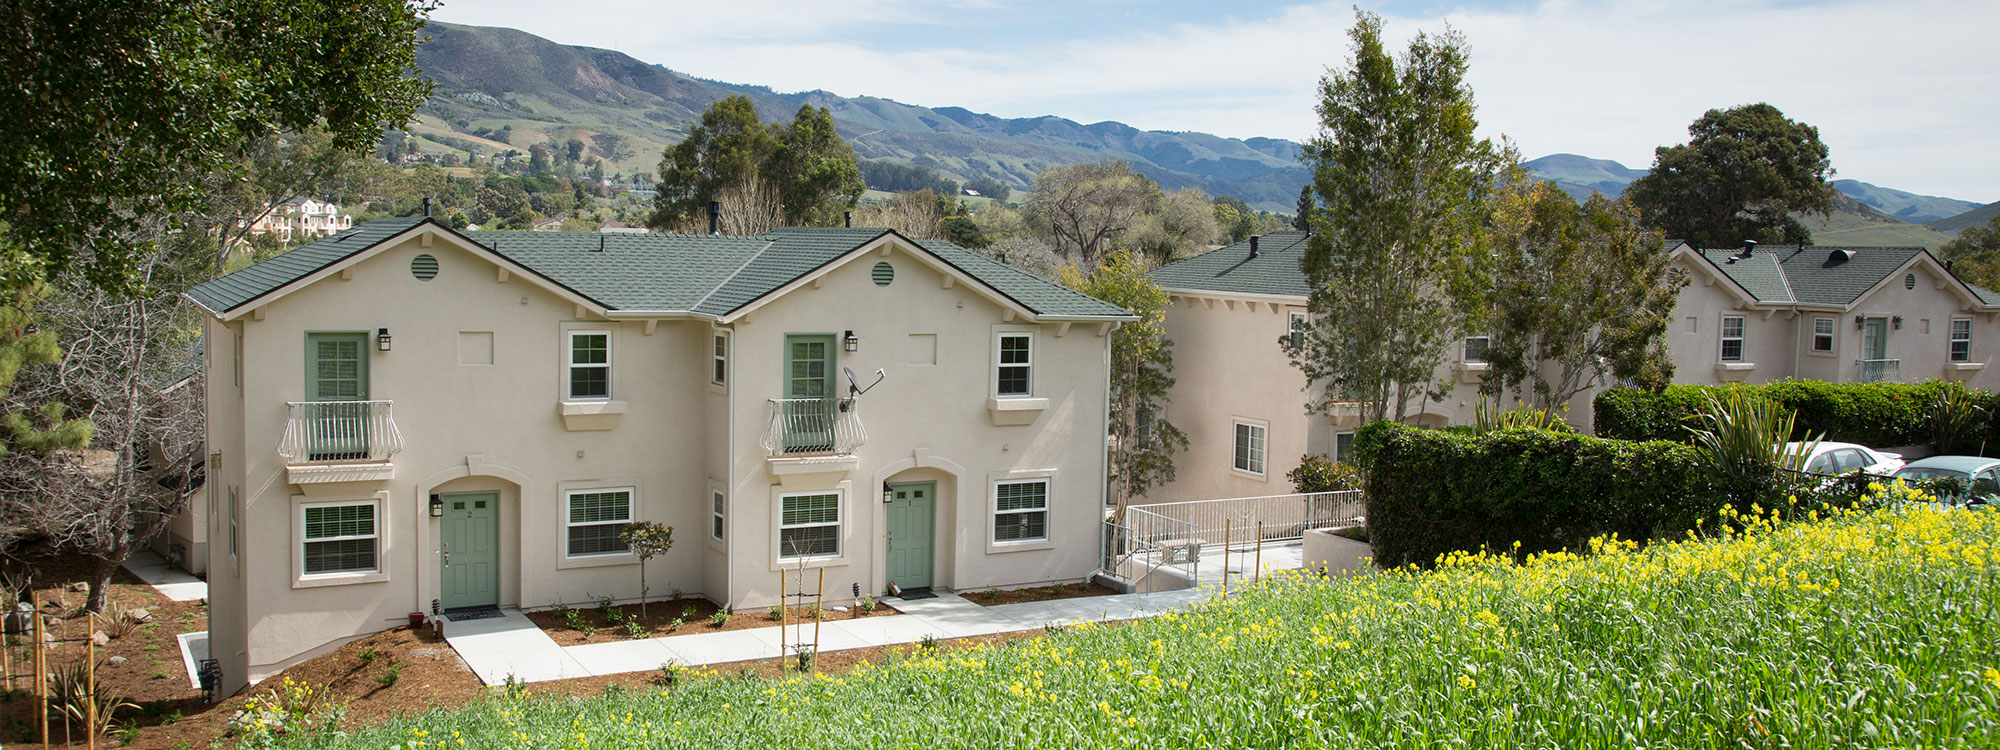 Multi-residence Builder - San Luis Obispo Construction - Apartment Building Contractor - JW Design & Construction